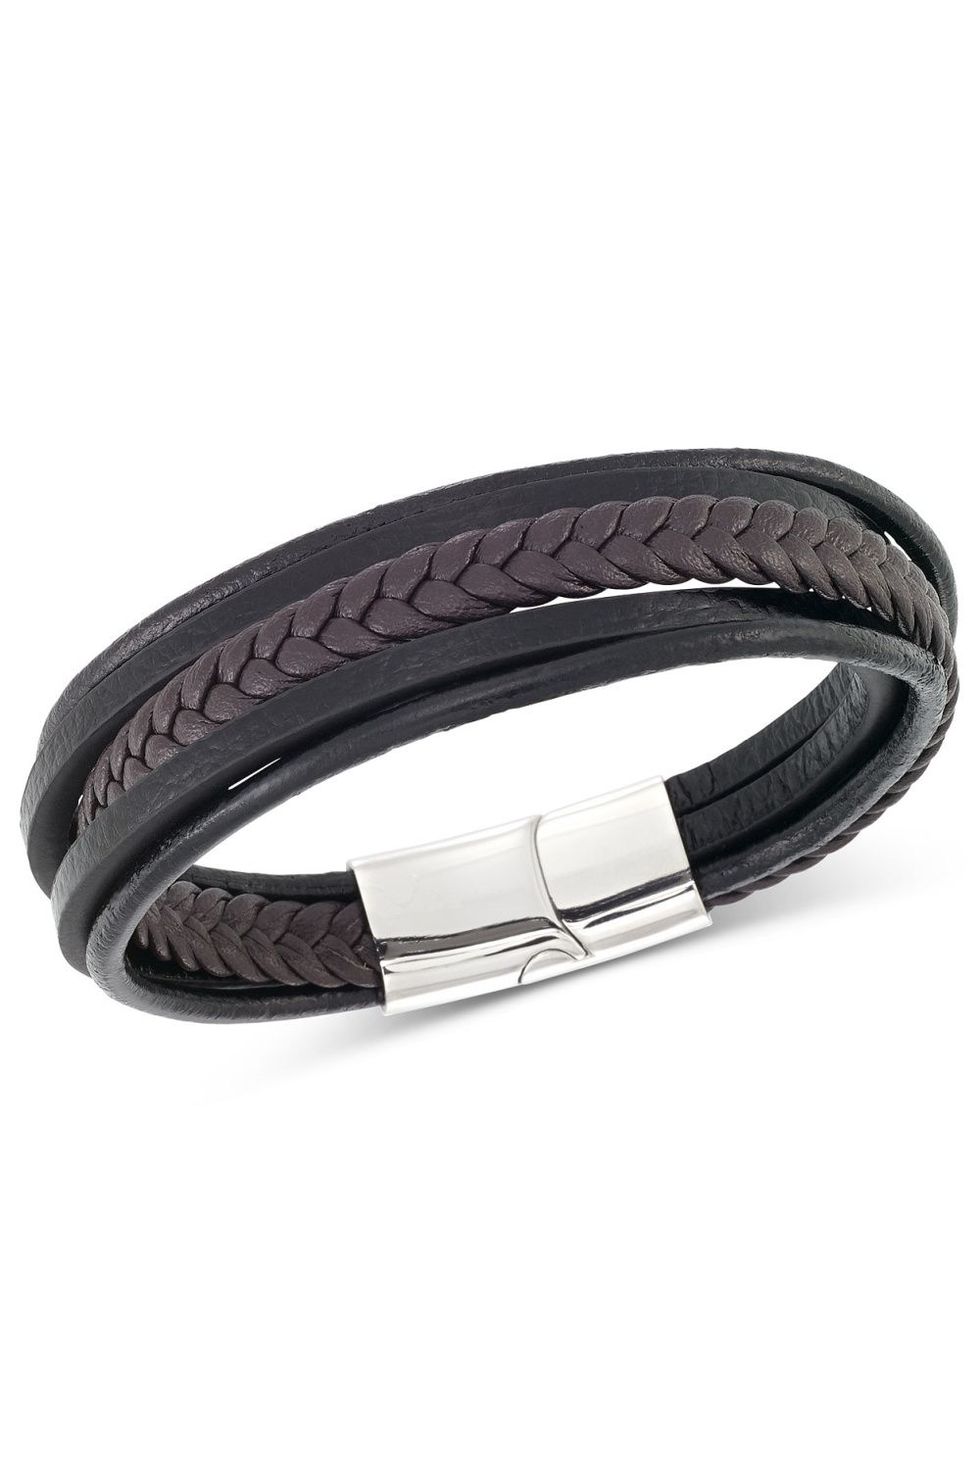 Black & Brown Multi-Row Leather Bracelet